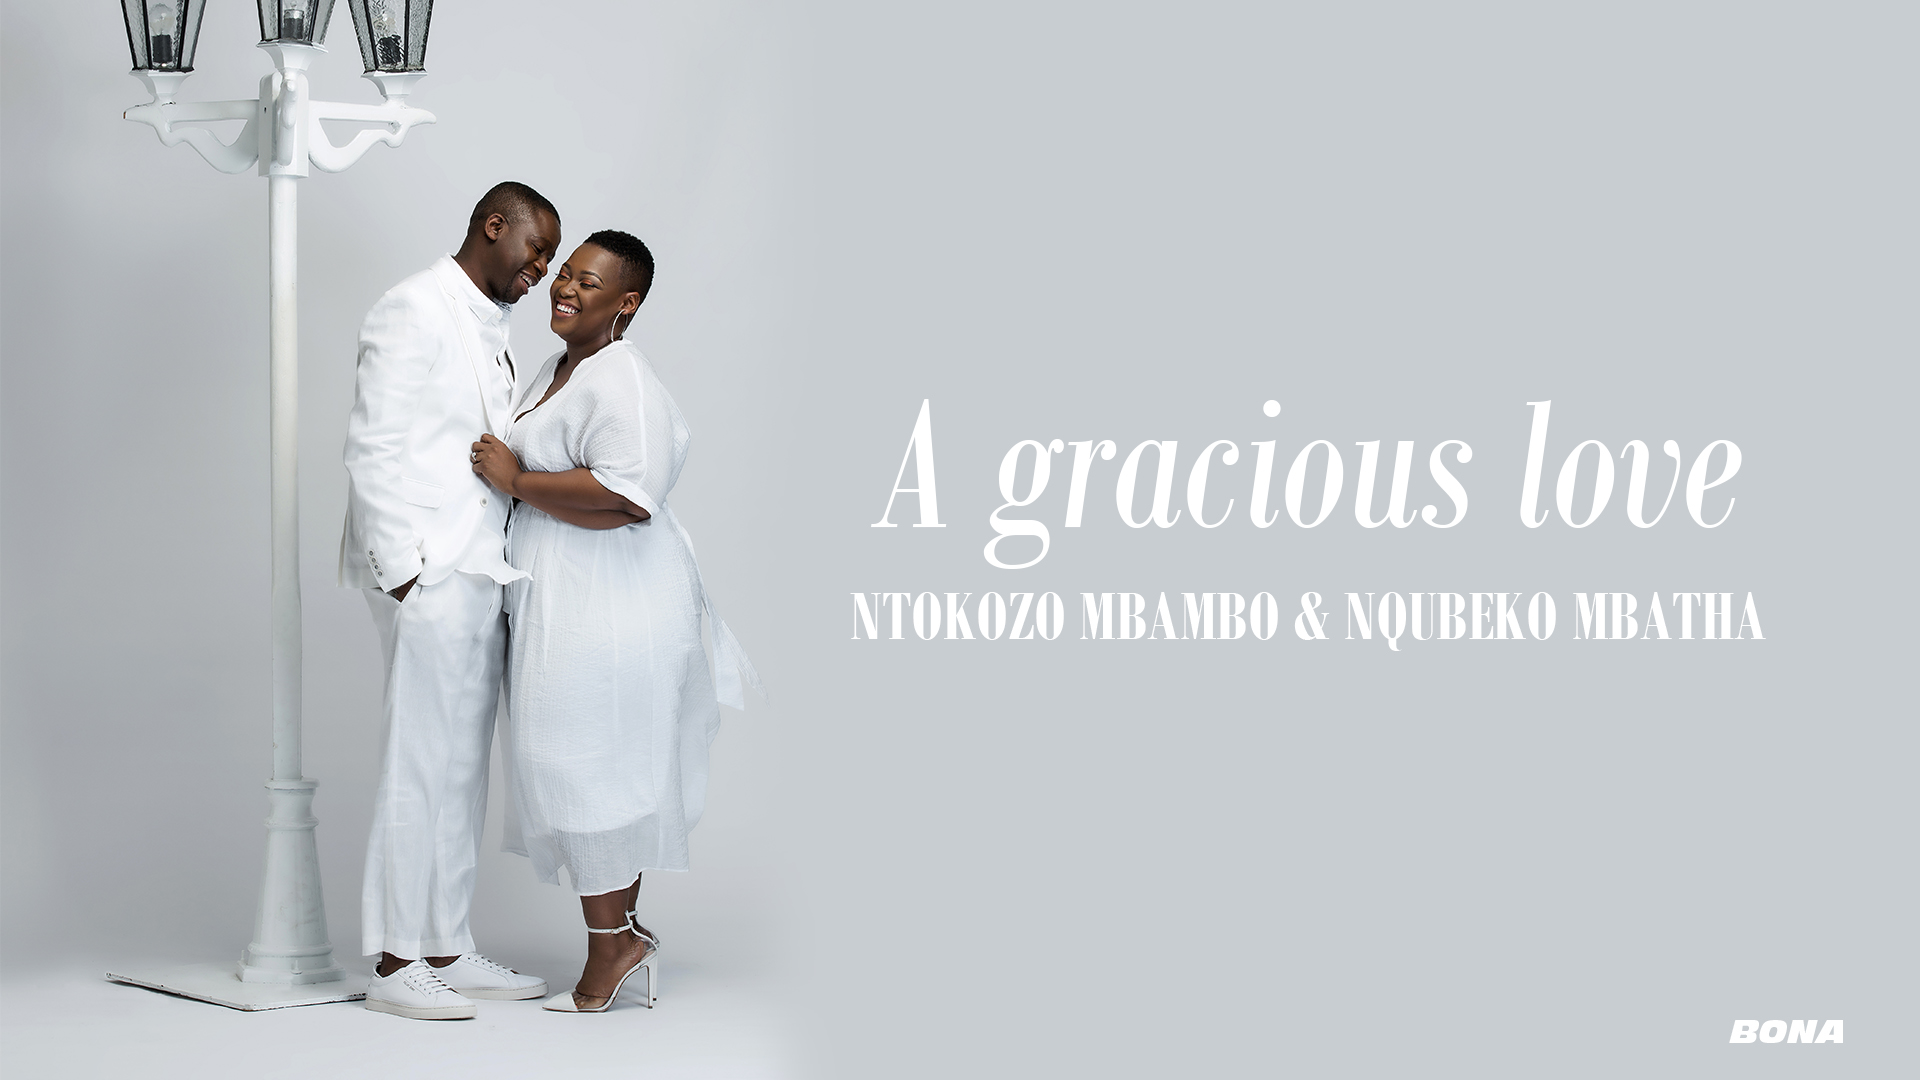 Ntokozo Mbambo and Nqubeko Mbatha talk love and romance